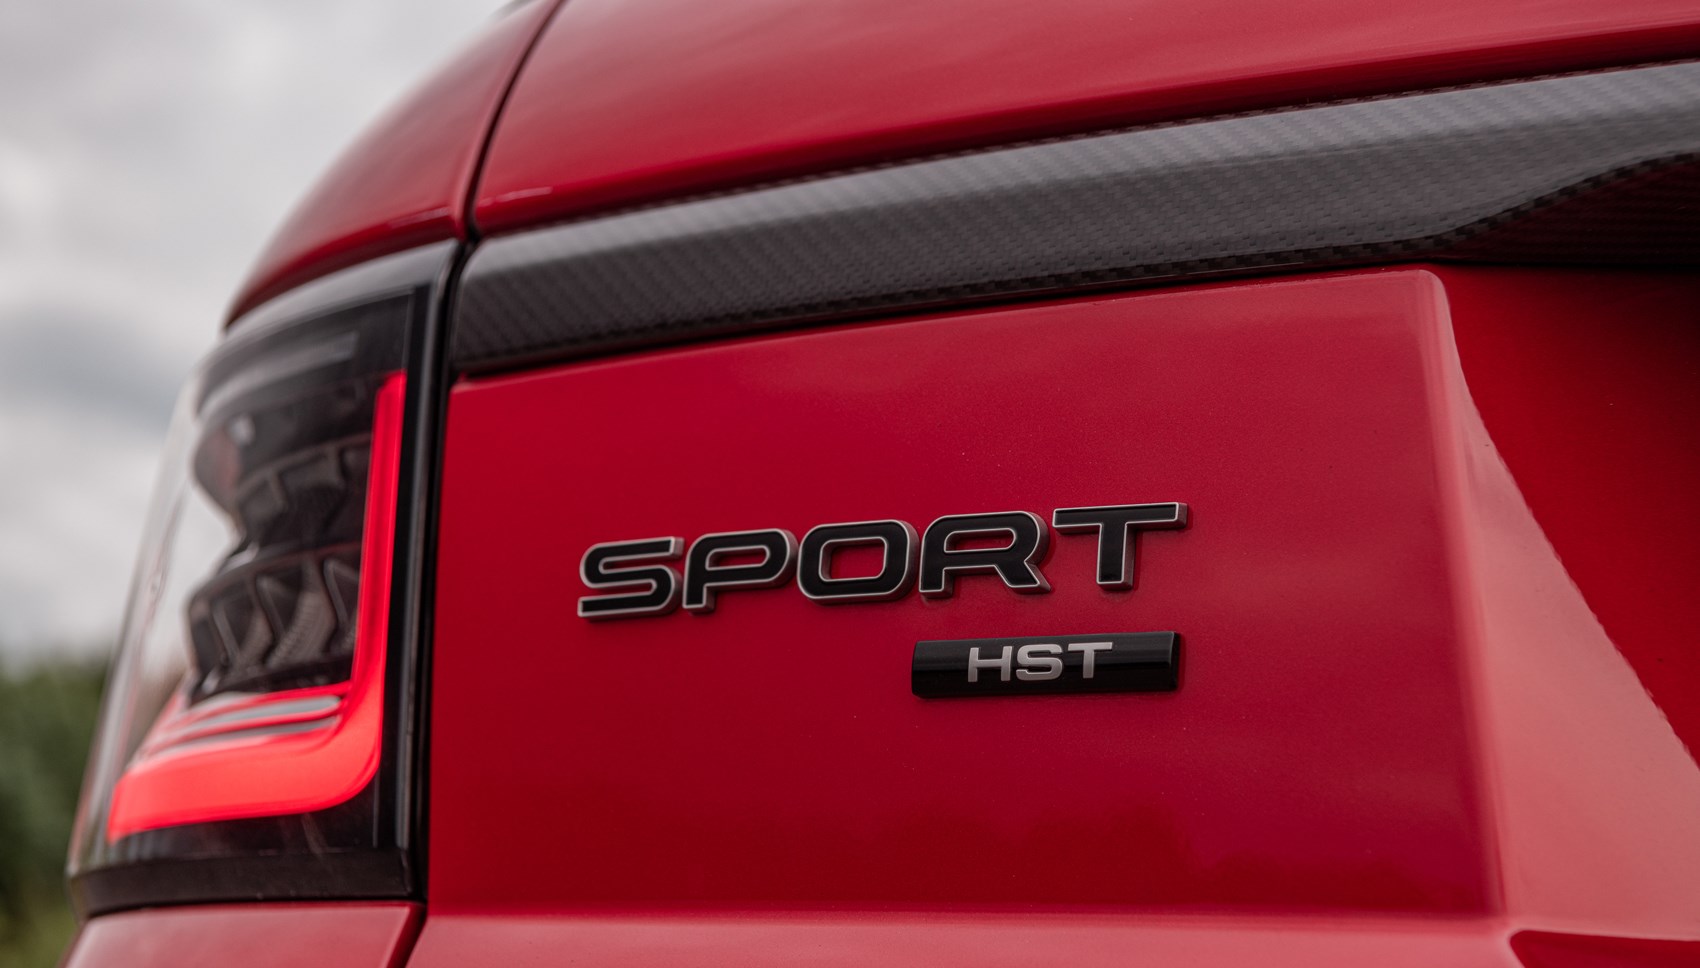 Range Rover Sport HST badge